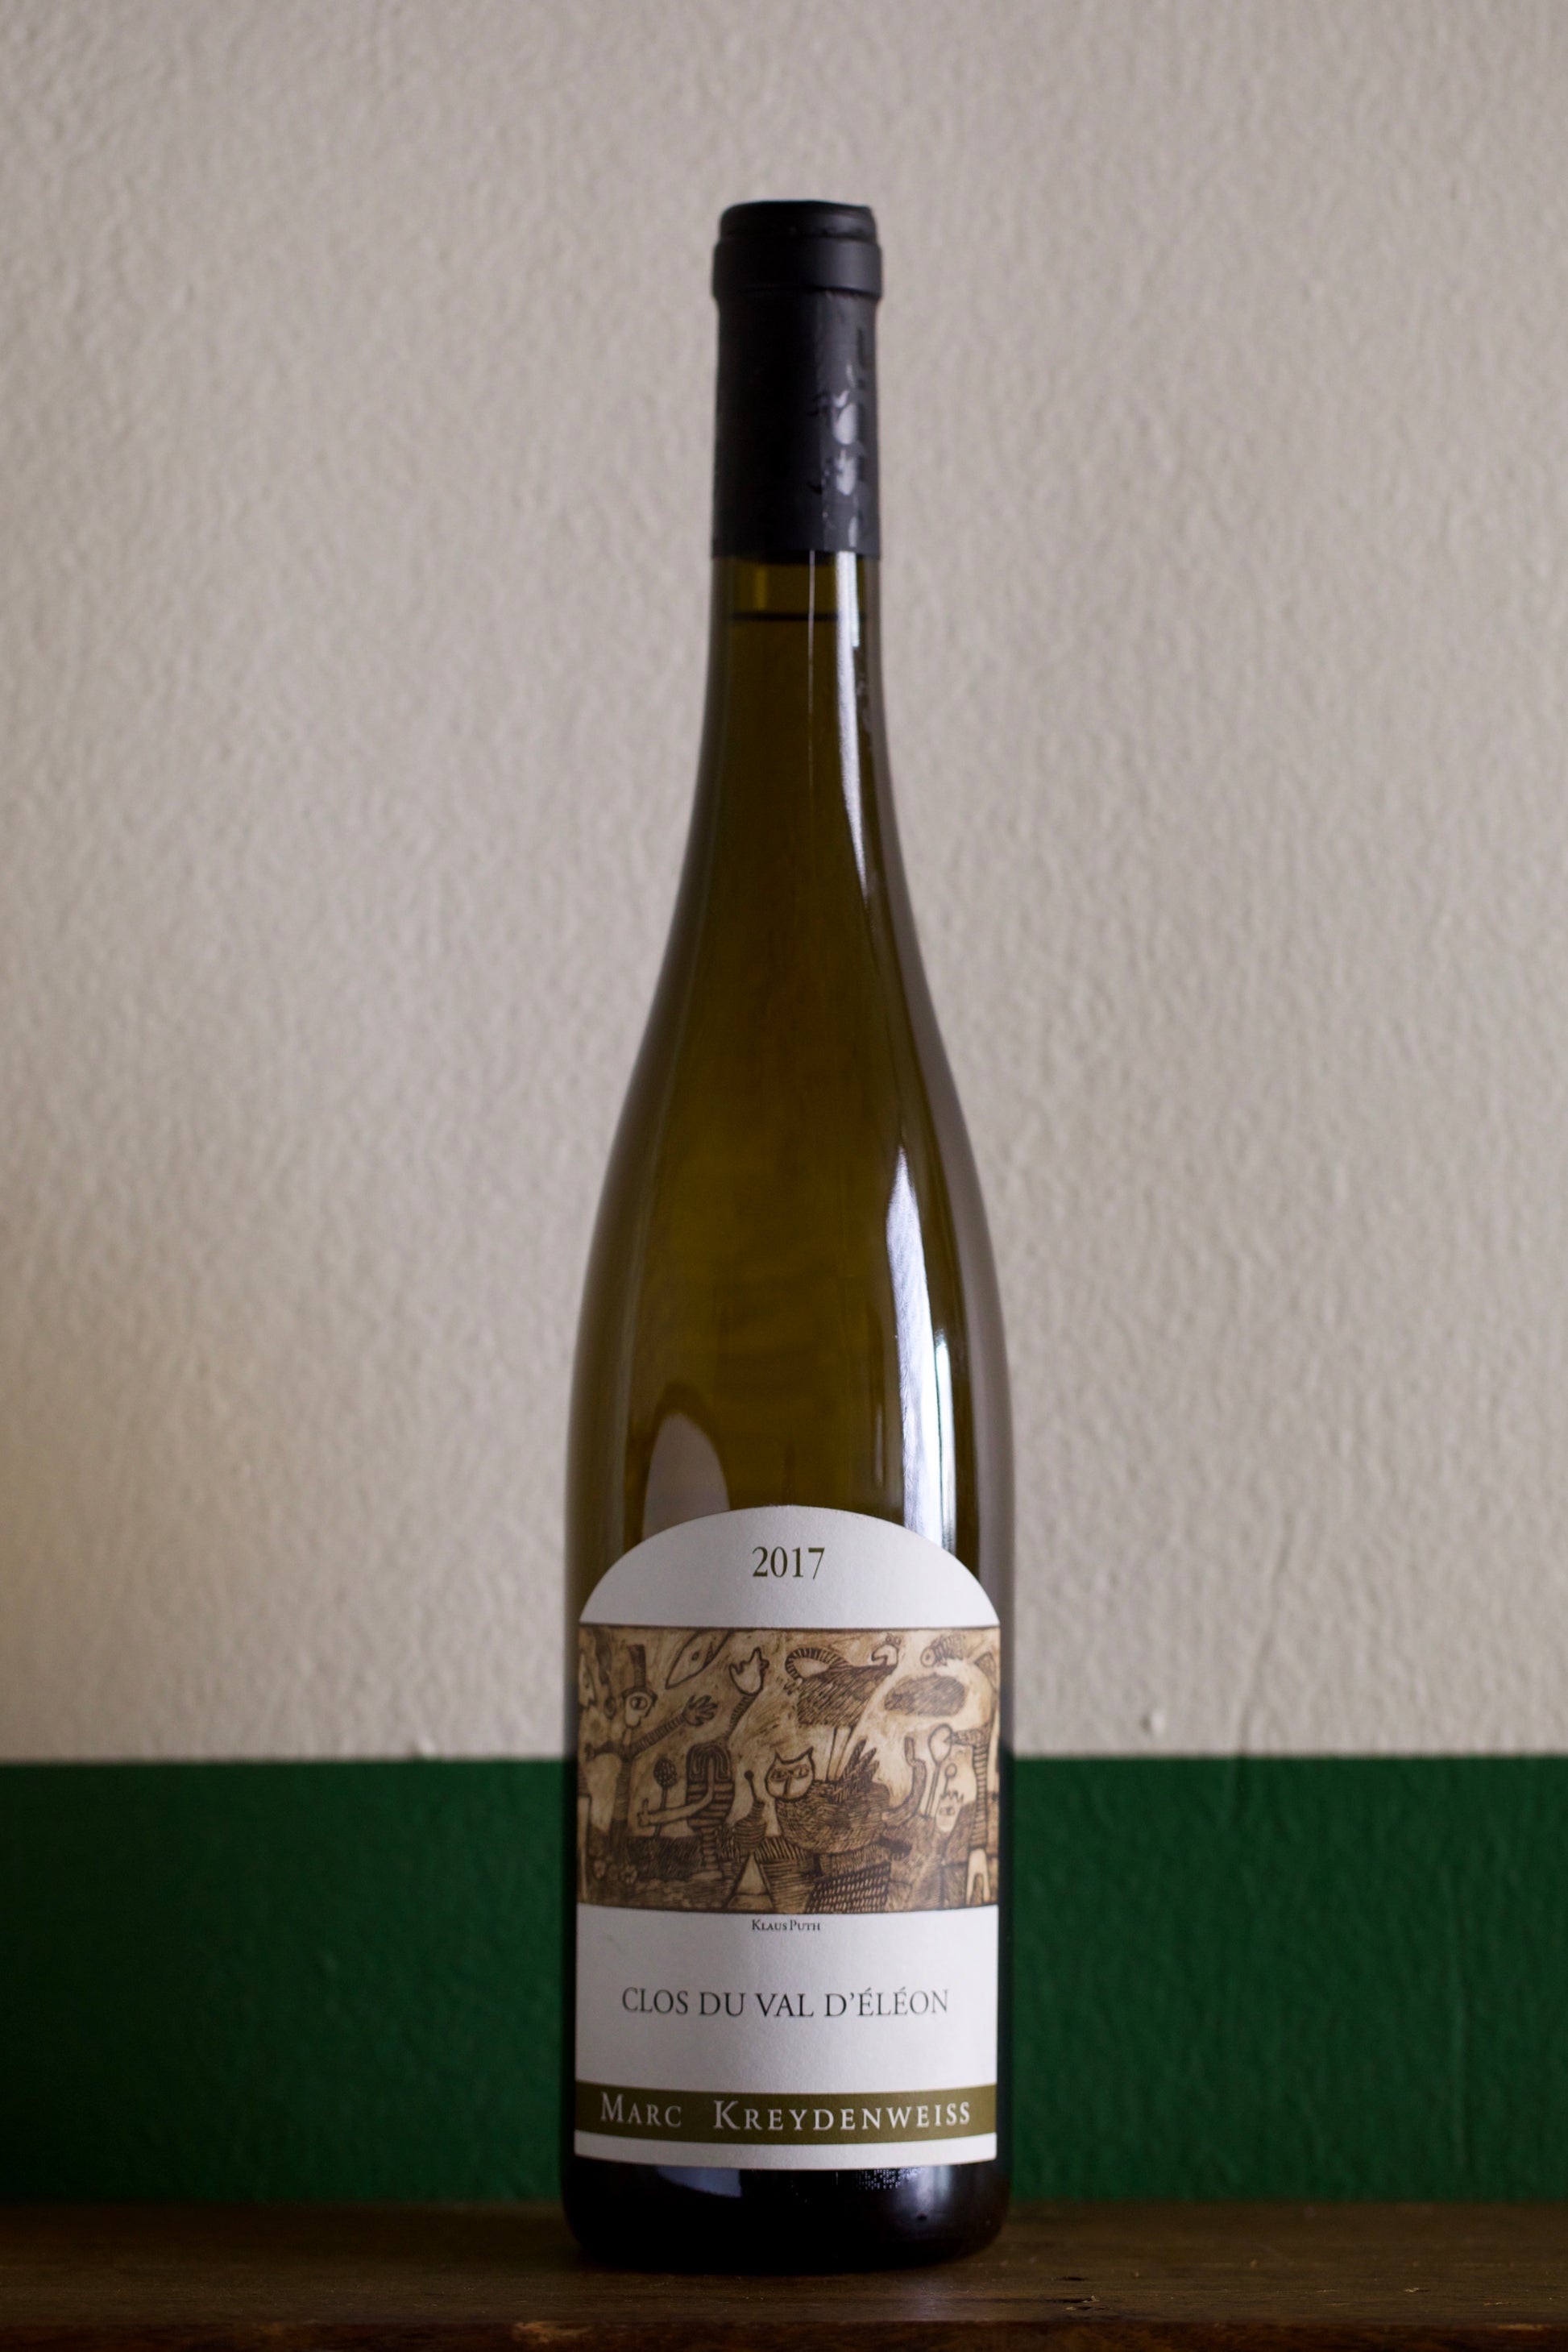 Bottle of Domaine Kreydenweiss 'Clos du Val d'Eleon' 2017 750ml